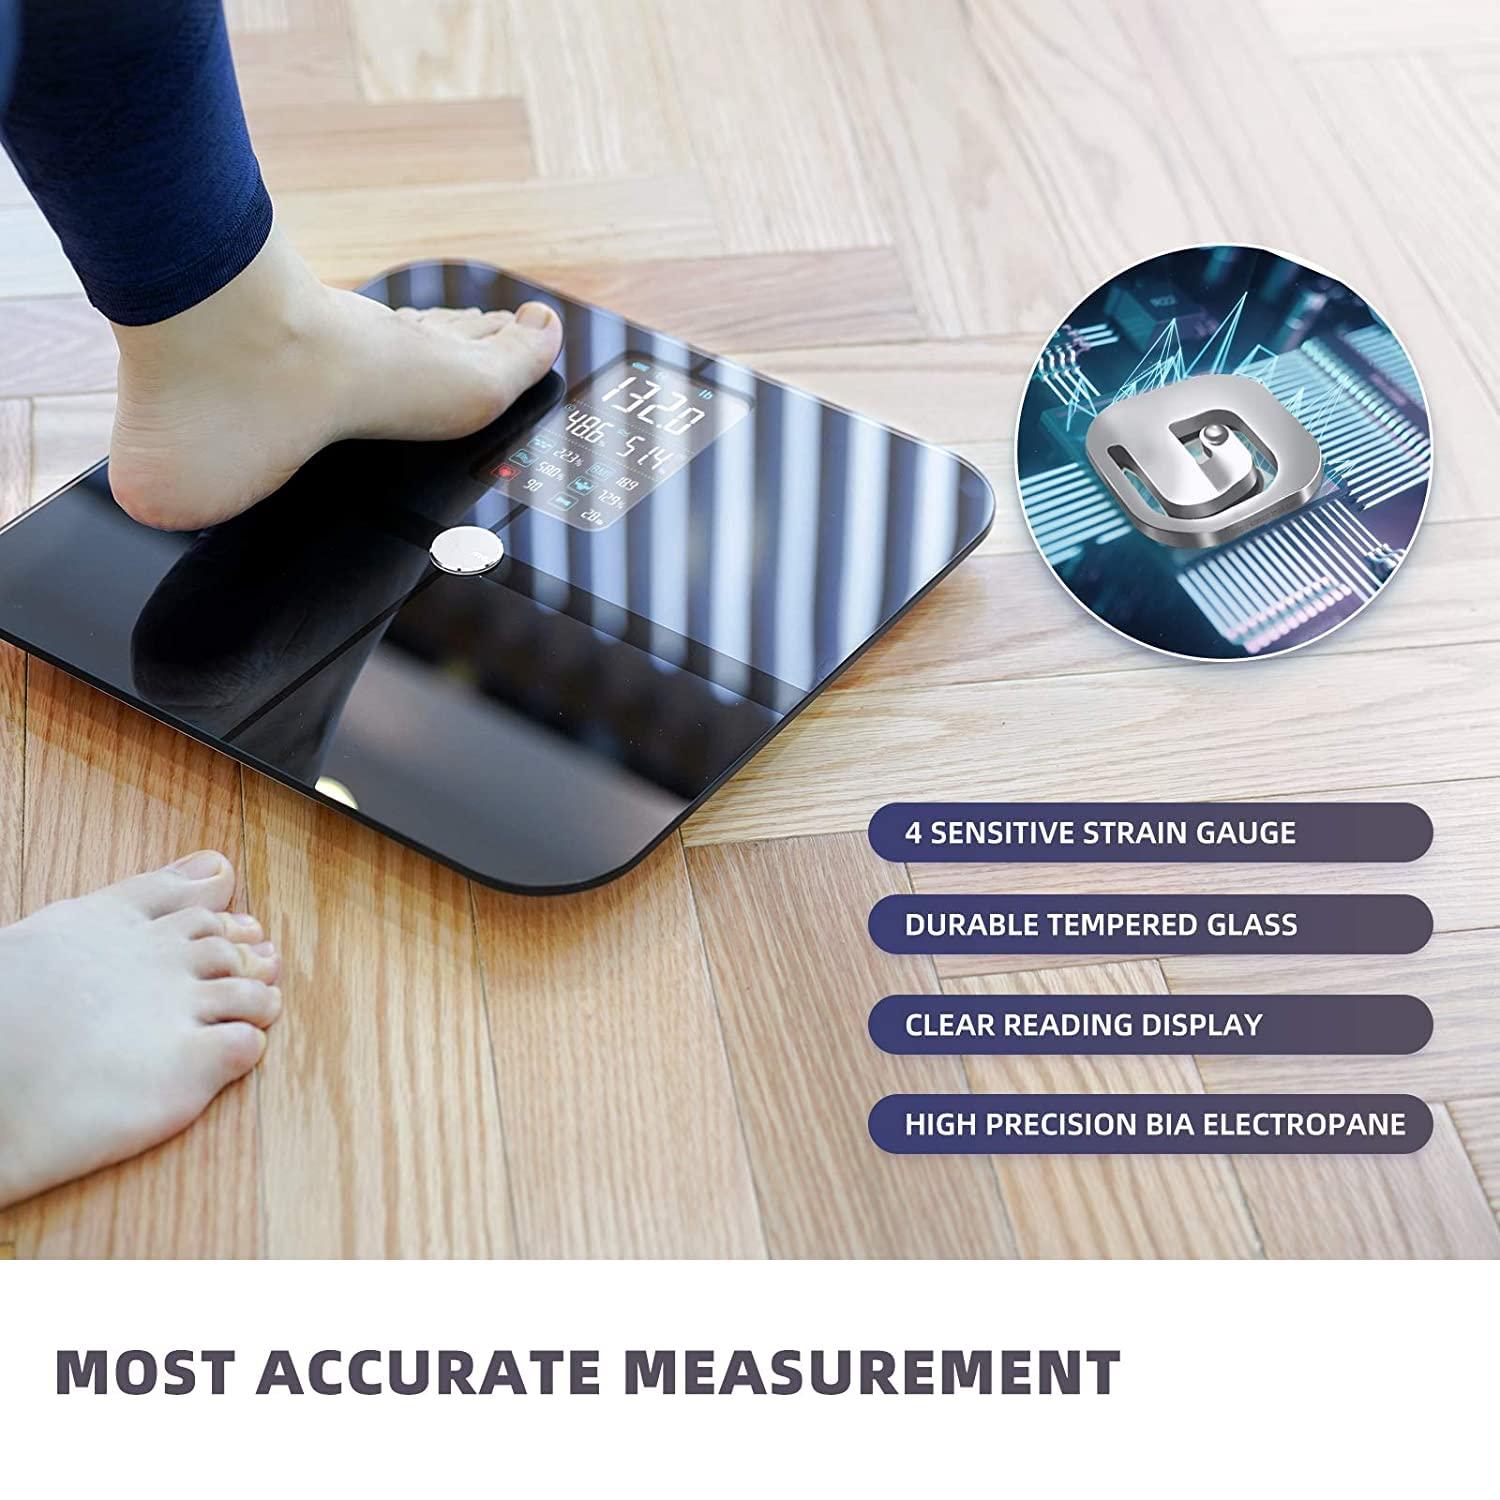 Body Fat Scale, High Accurate Measurement Digital Smart Bathroom